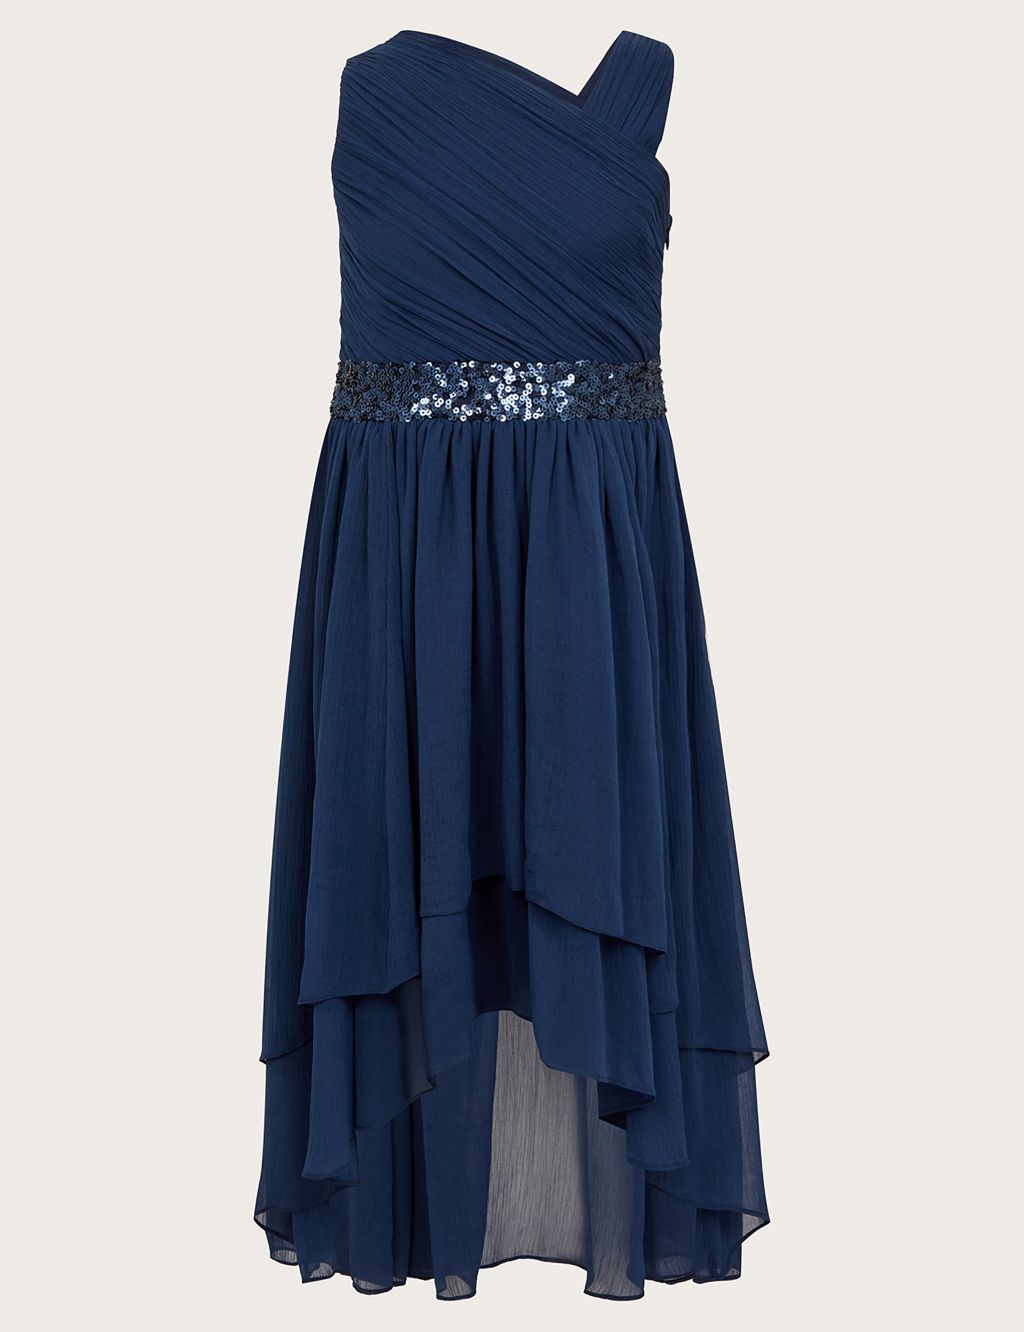 Sequin Chiffon Occasion Dress (8-15 Yrs) image 1